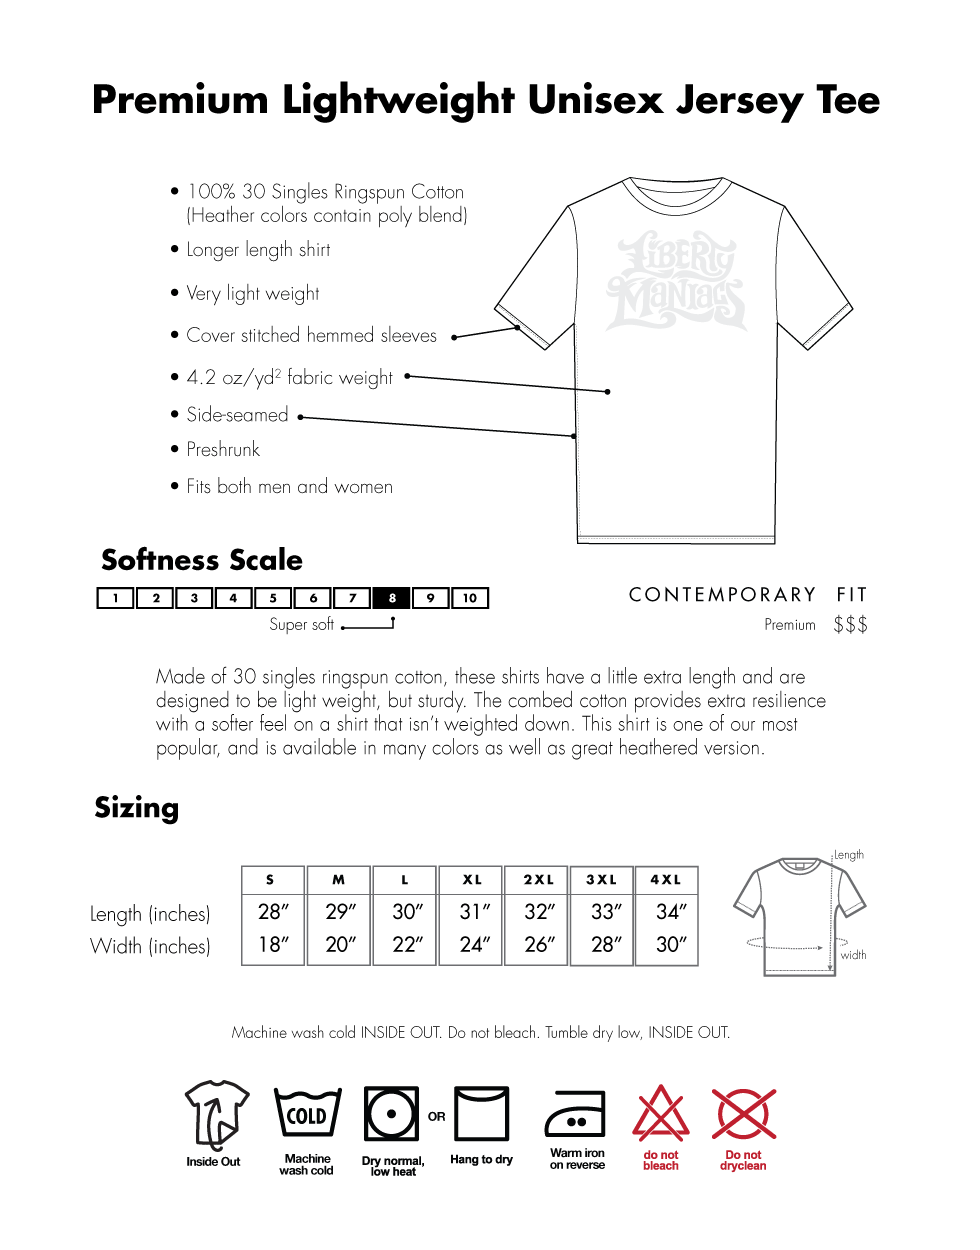 Wolf Etching Unisex T-Shirt